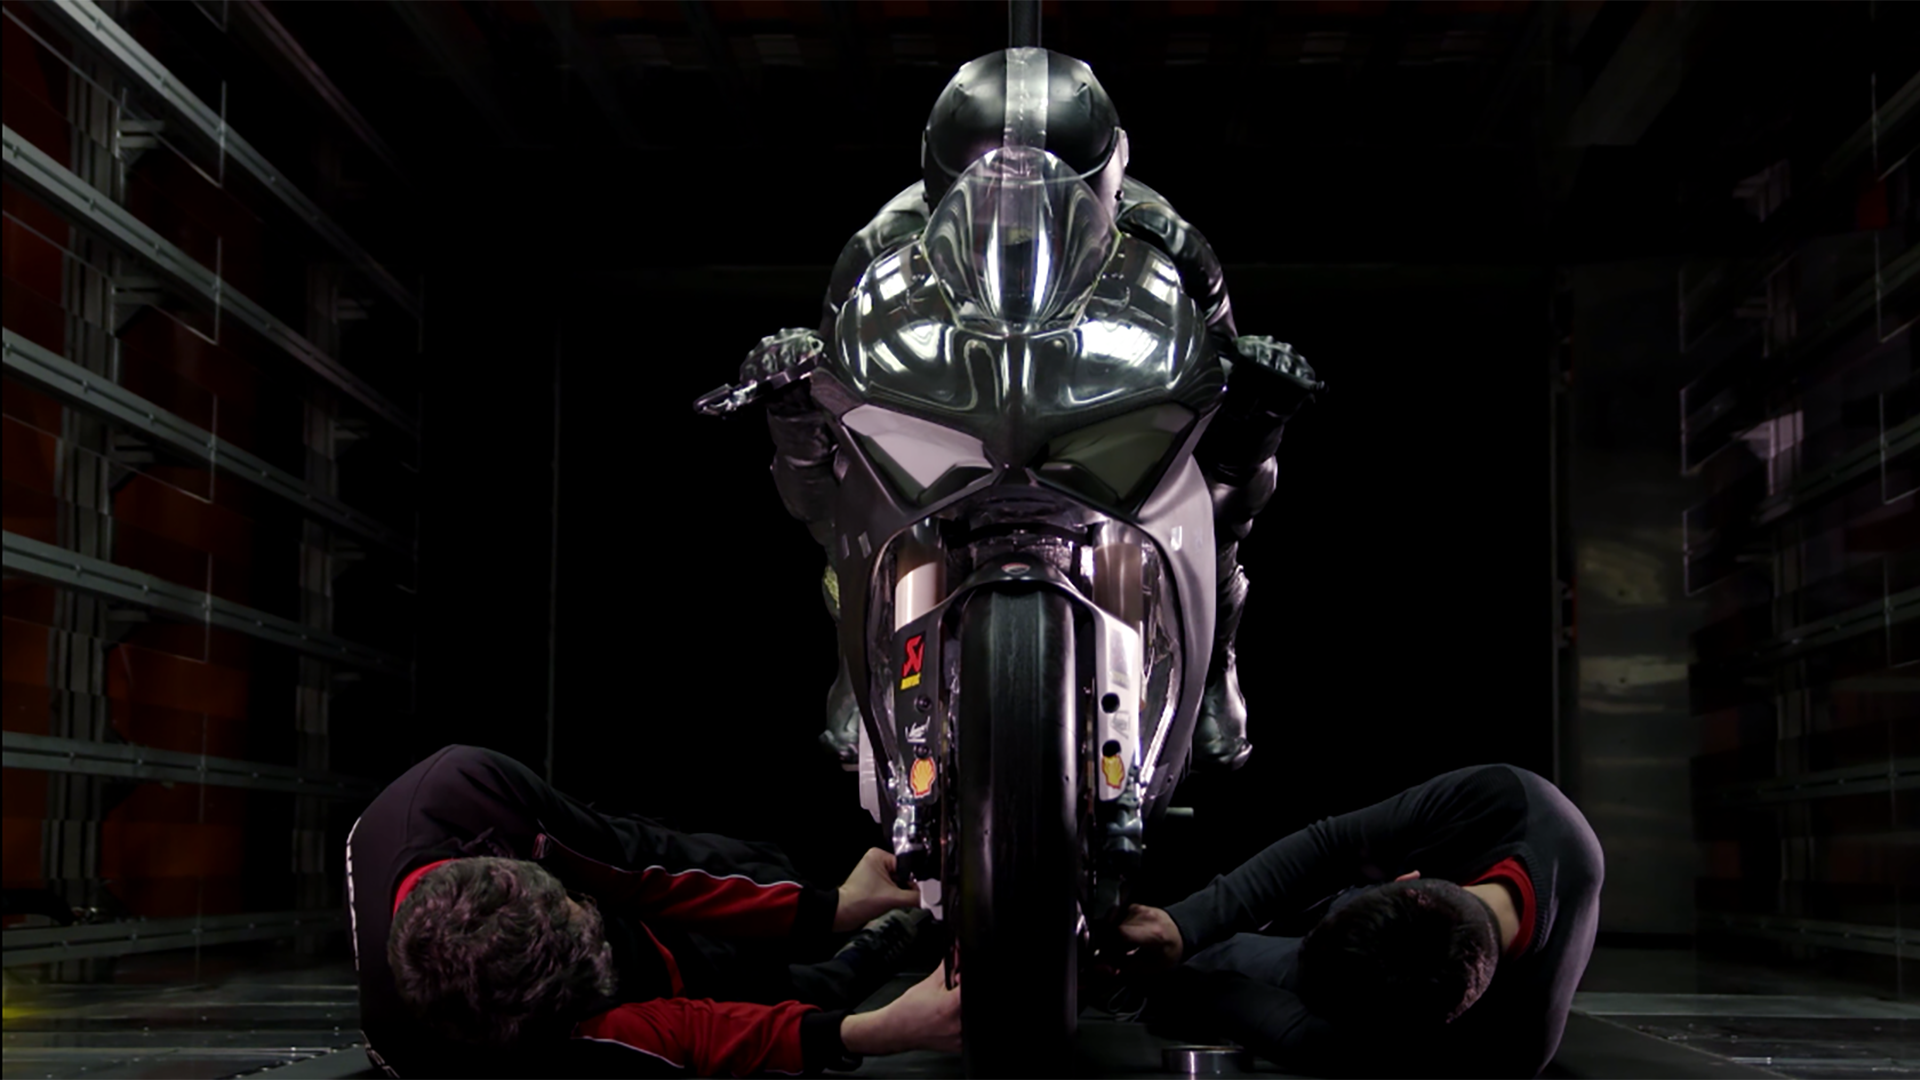 Lenovo & Ducati: Big Data & AI Transforming MotoGP Racing